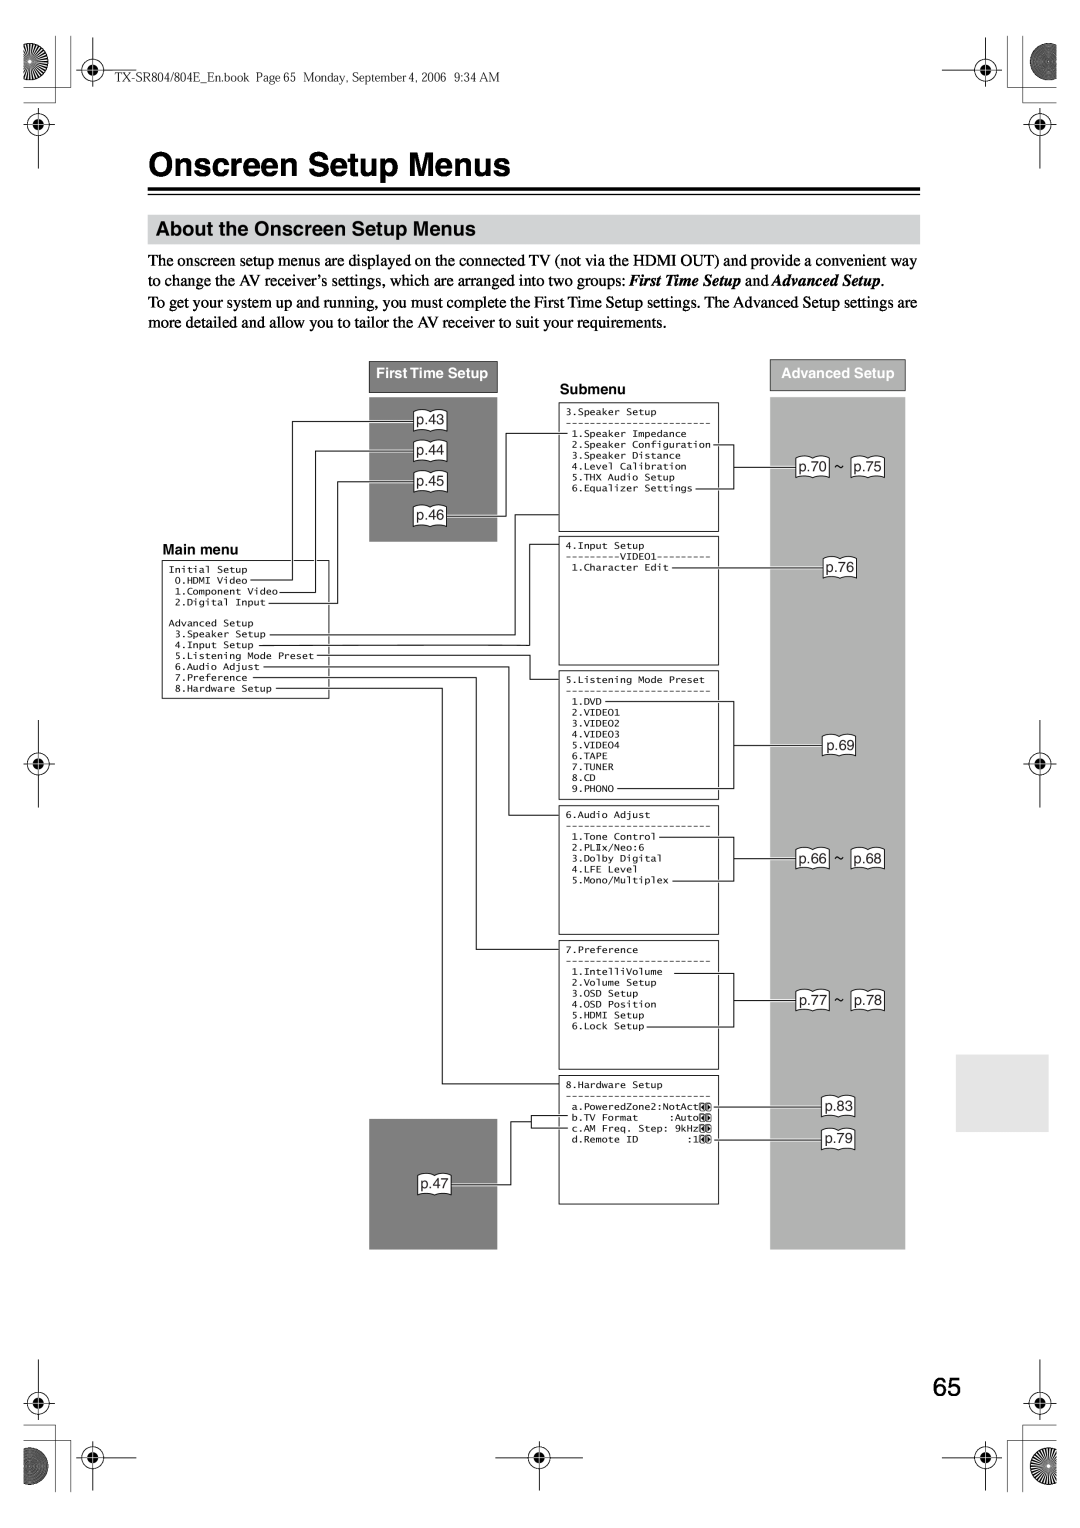 Onkyo TX-SR804E instruction manual About the Onscreen Setup Menus 